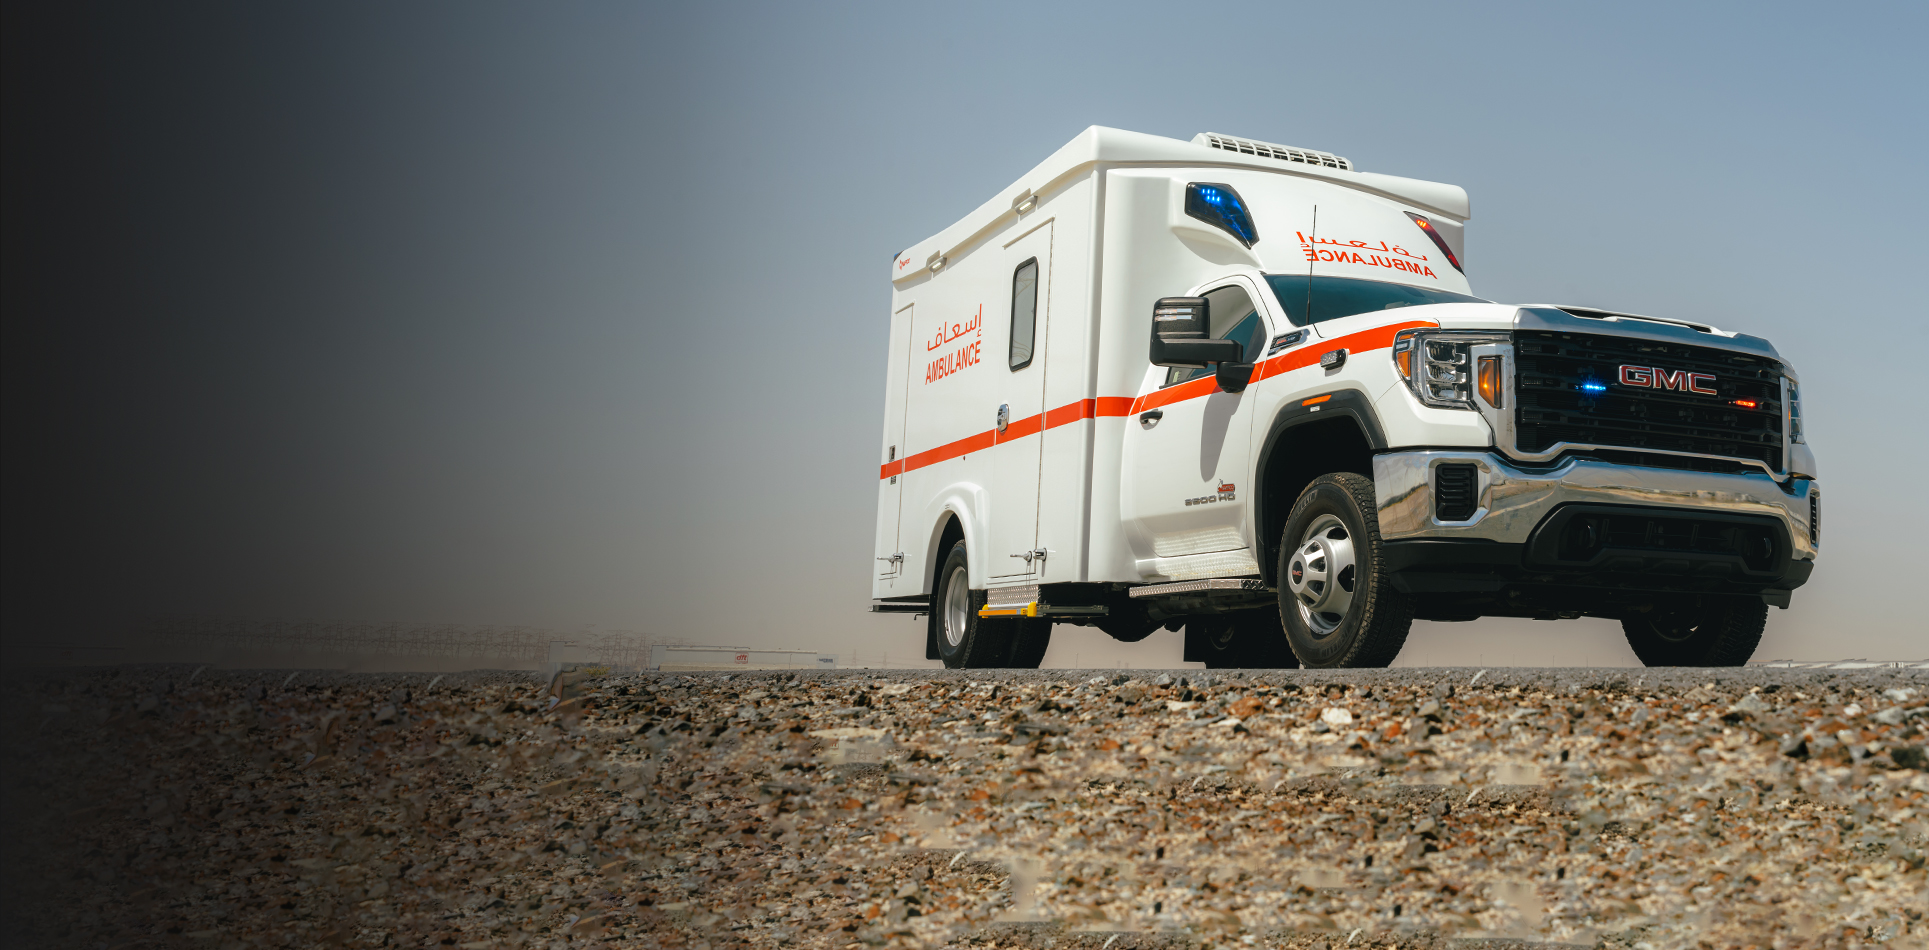 Ambulances & Special Vehicles